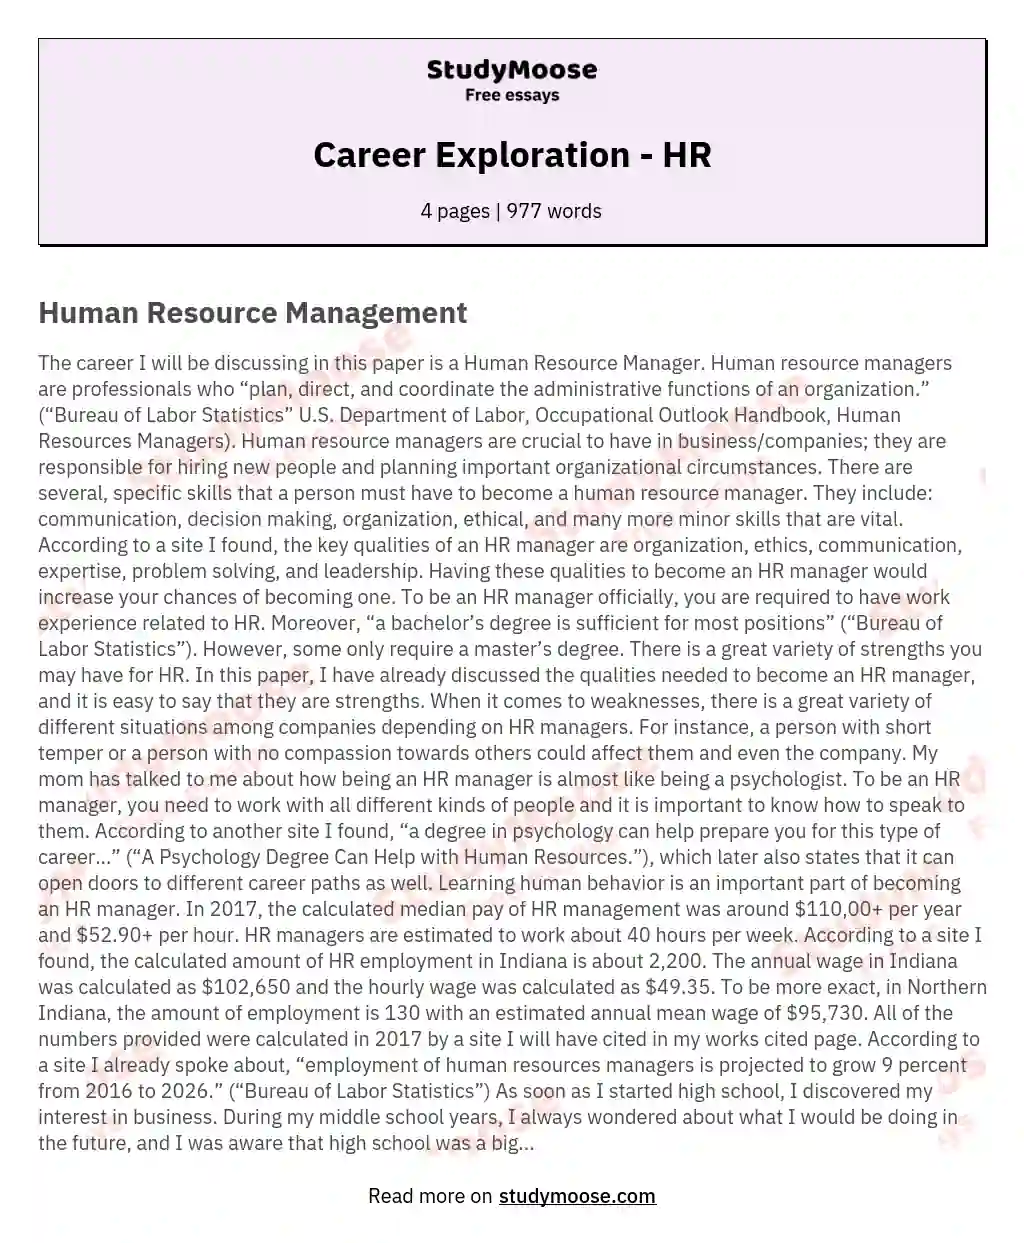 Career Exploration - HR